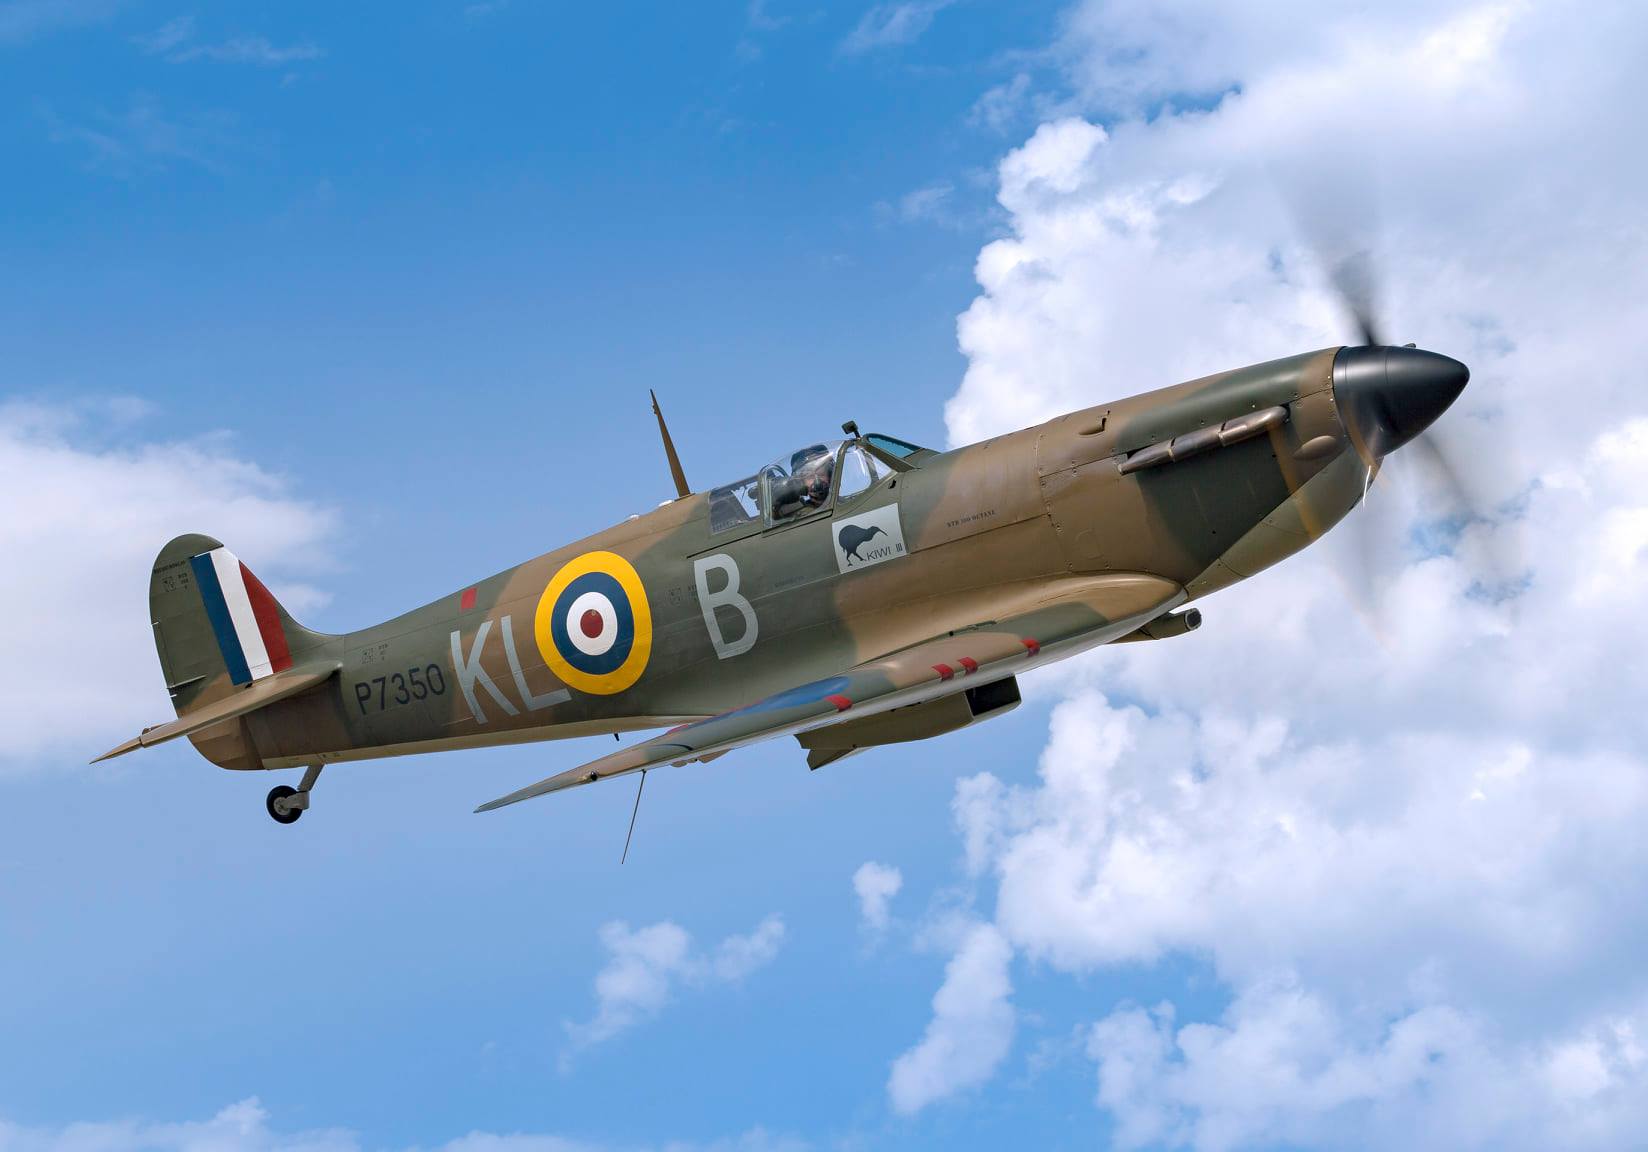 BBMF Spitfire Mk IIa P7350.jpg